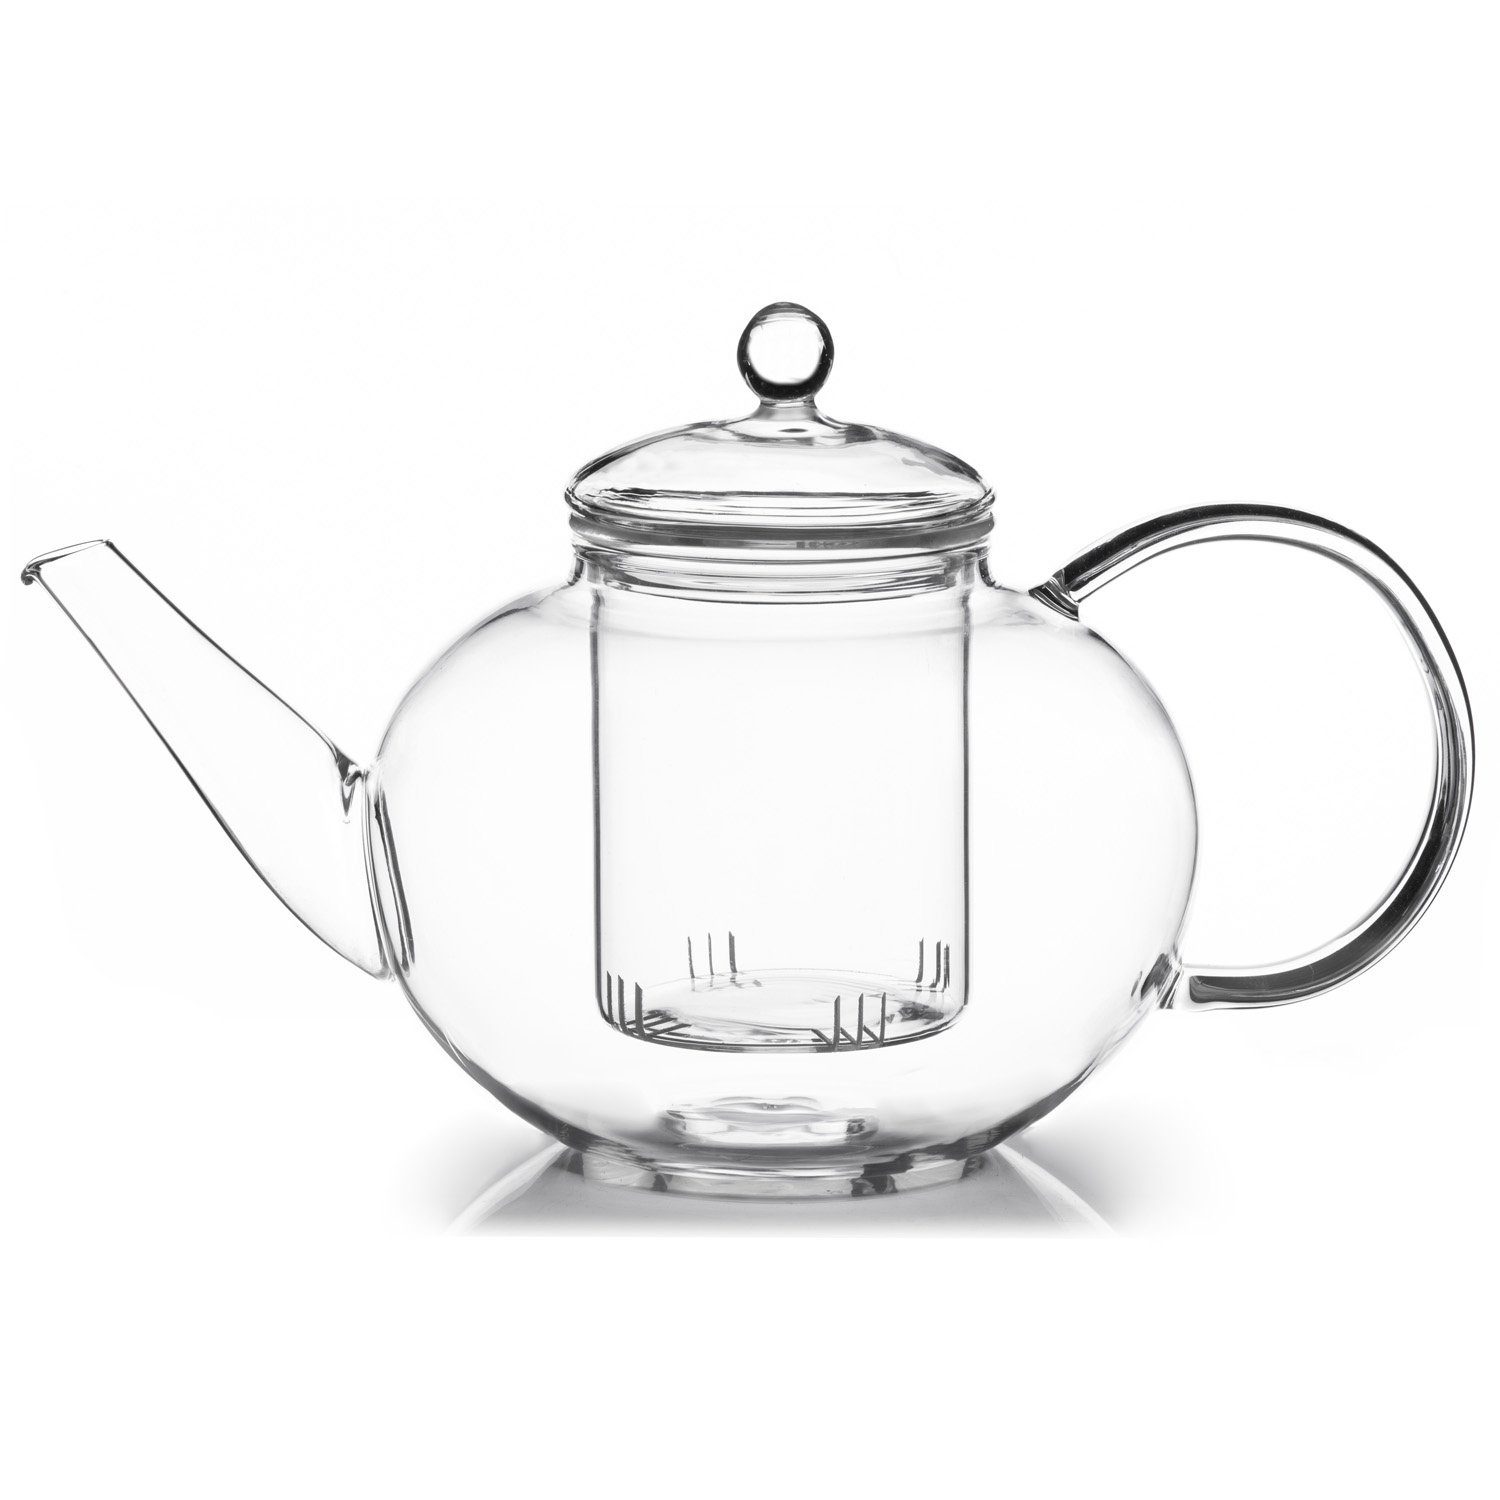 Teesieb, Teekanne Glas-Kanne l, Teefilter Dimono & mit Mundgeblasene 1.5 mit Filtereinsatz Teekanne